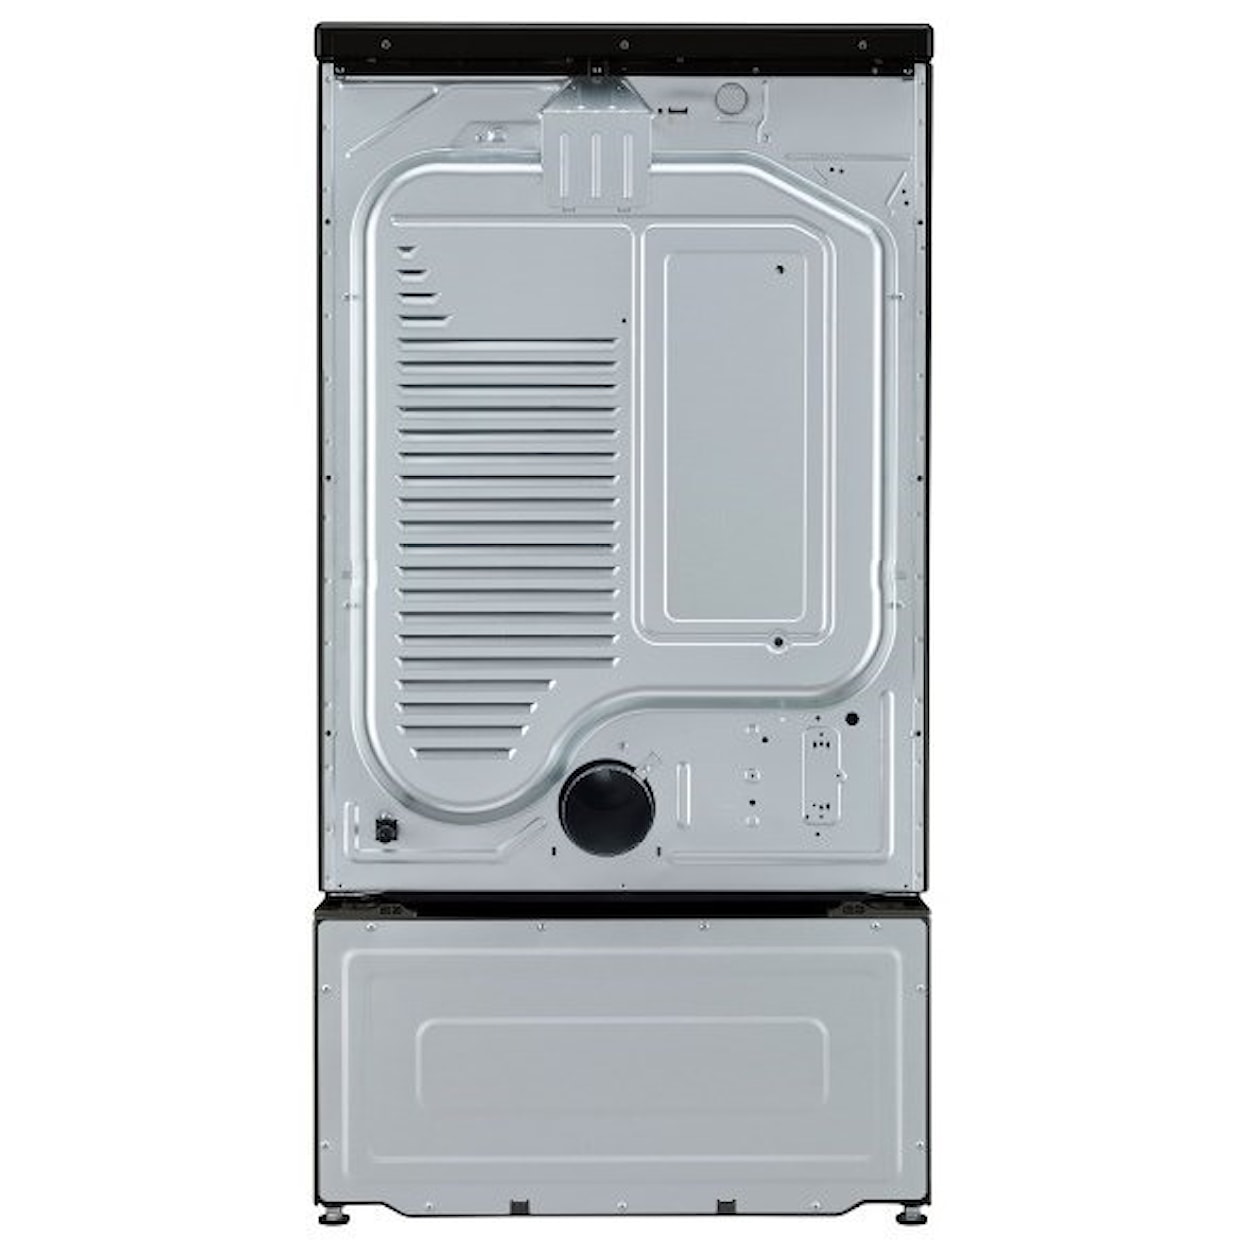 LG Appliances Dryers 7.4 Cu. Ft. TurboSteam™ Gas Dryer